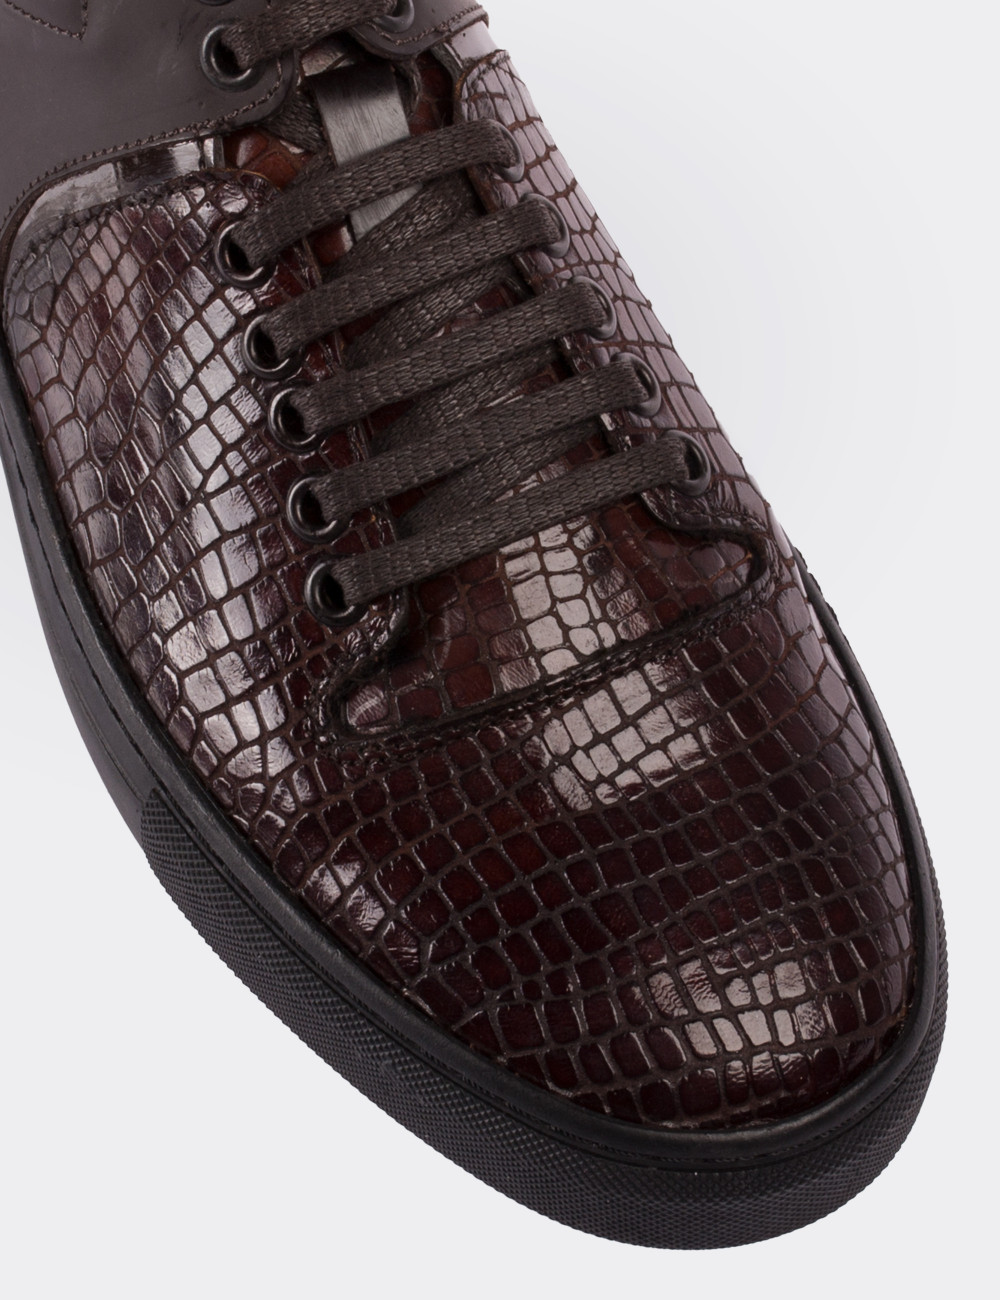 Brown Patent Leather Sneakers - Deery